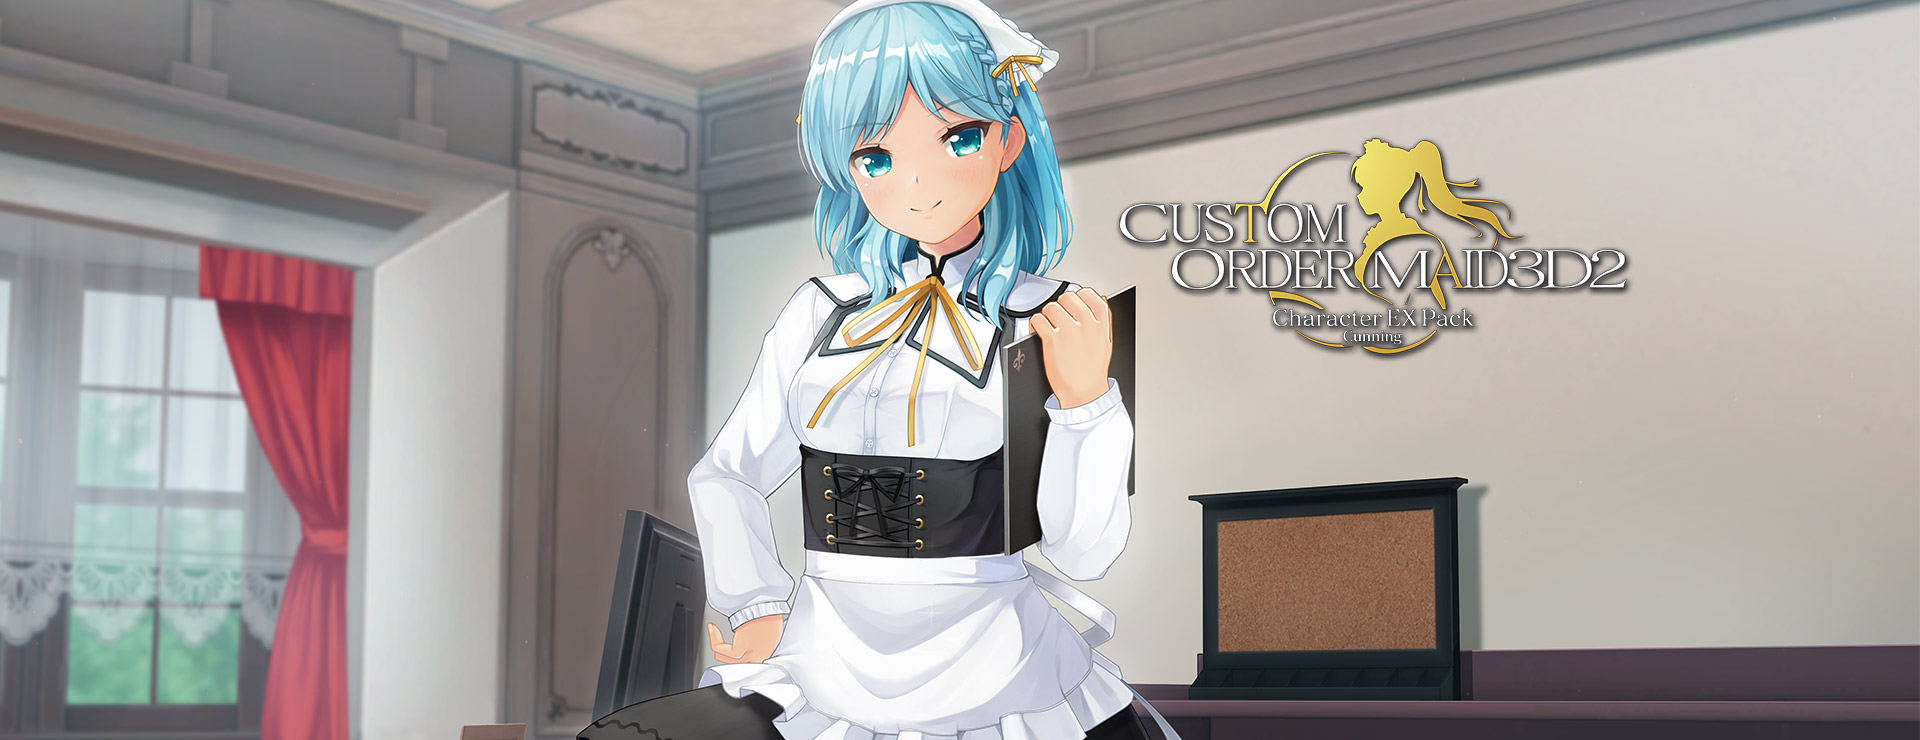 Custom Order Maid 3D: Character EX Pack Cunning - Simulation Jeu